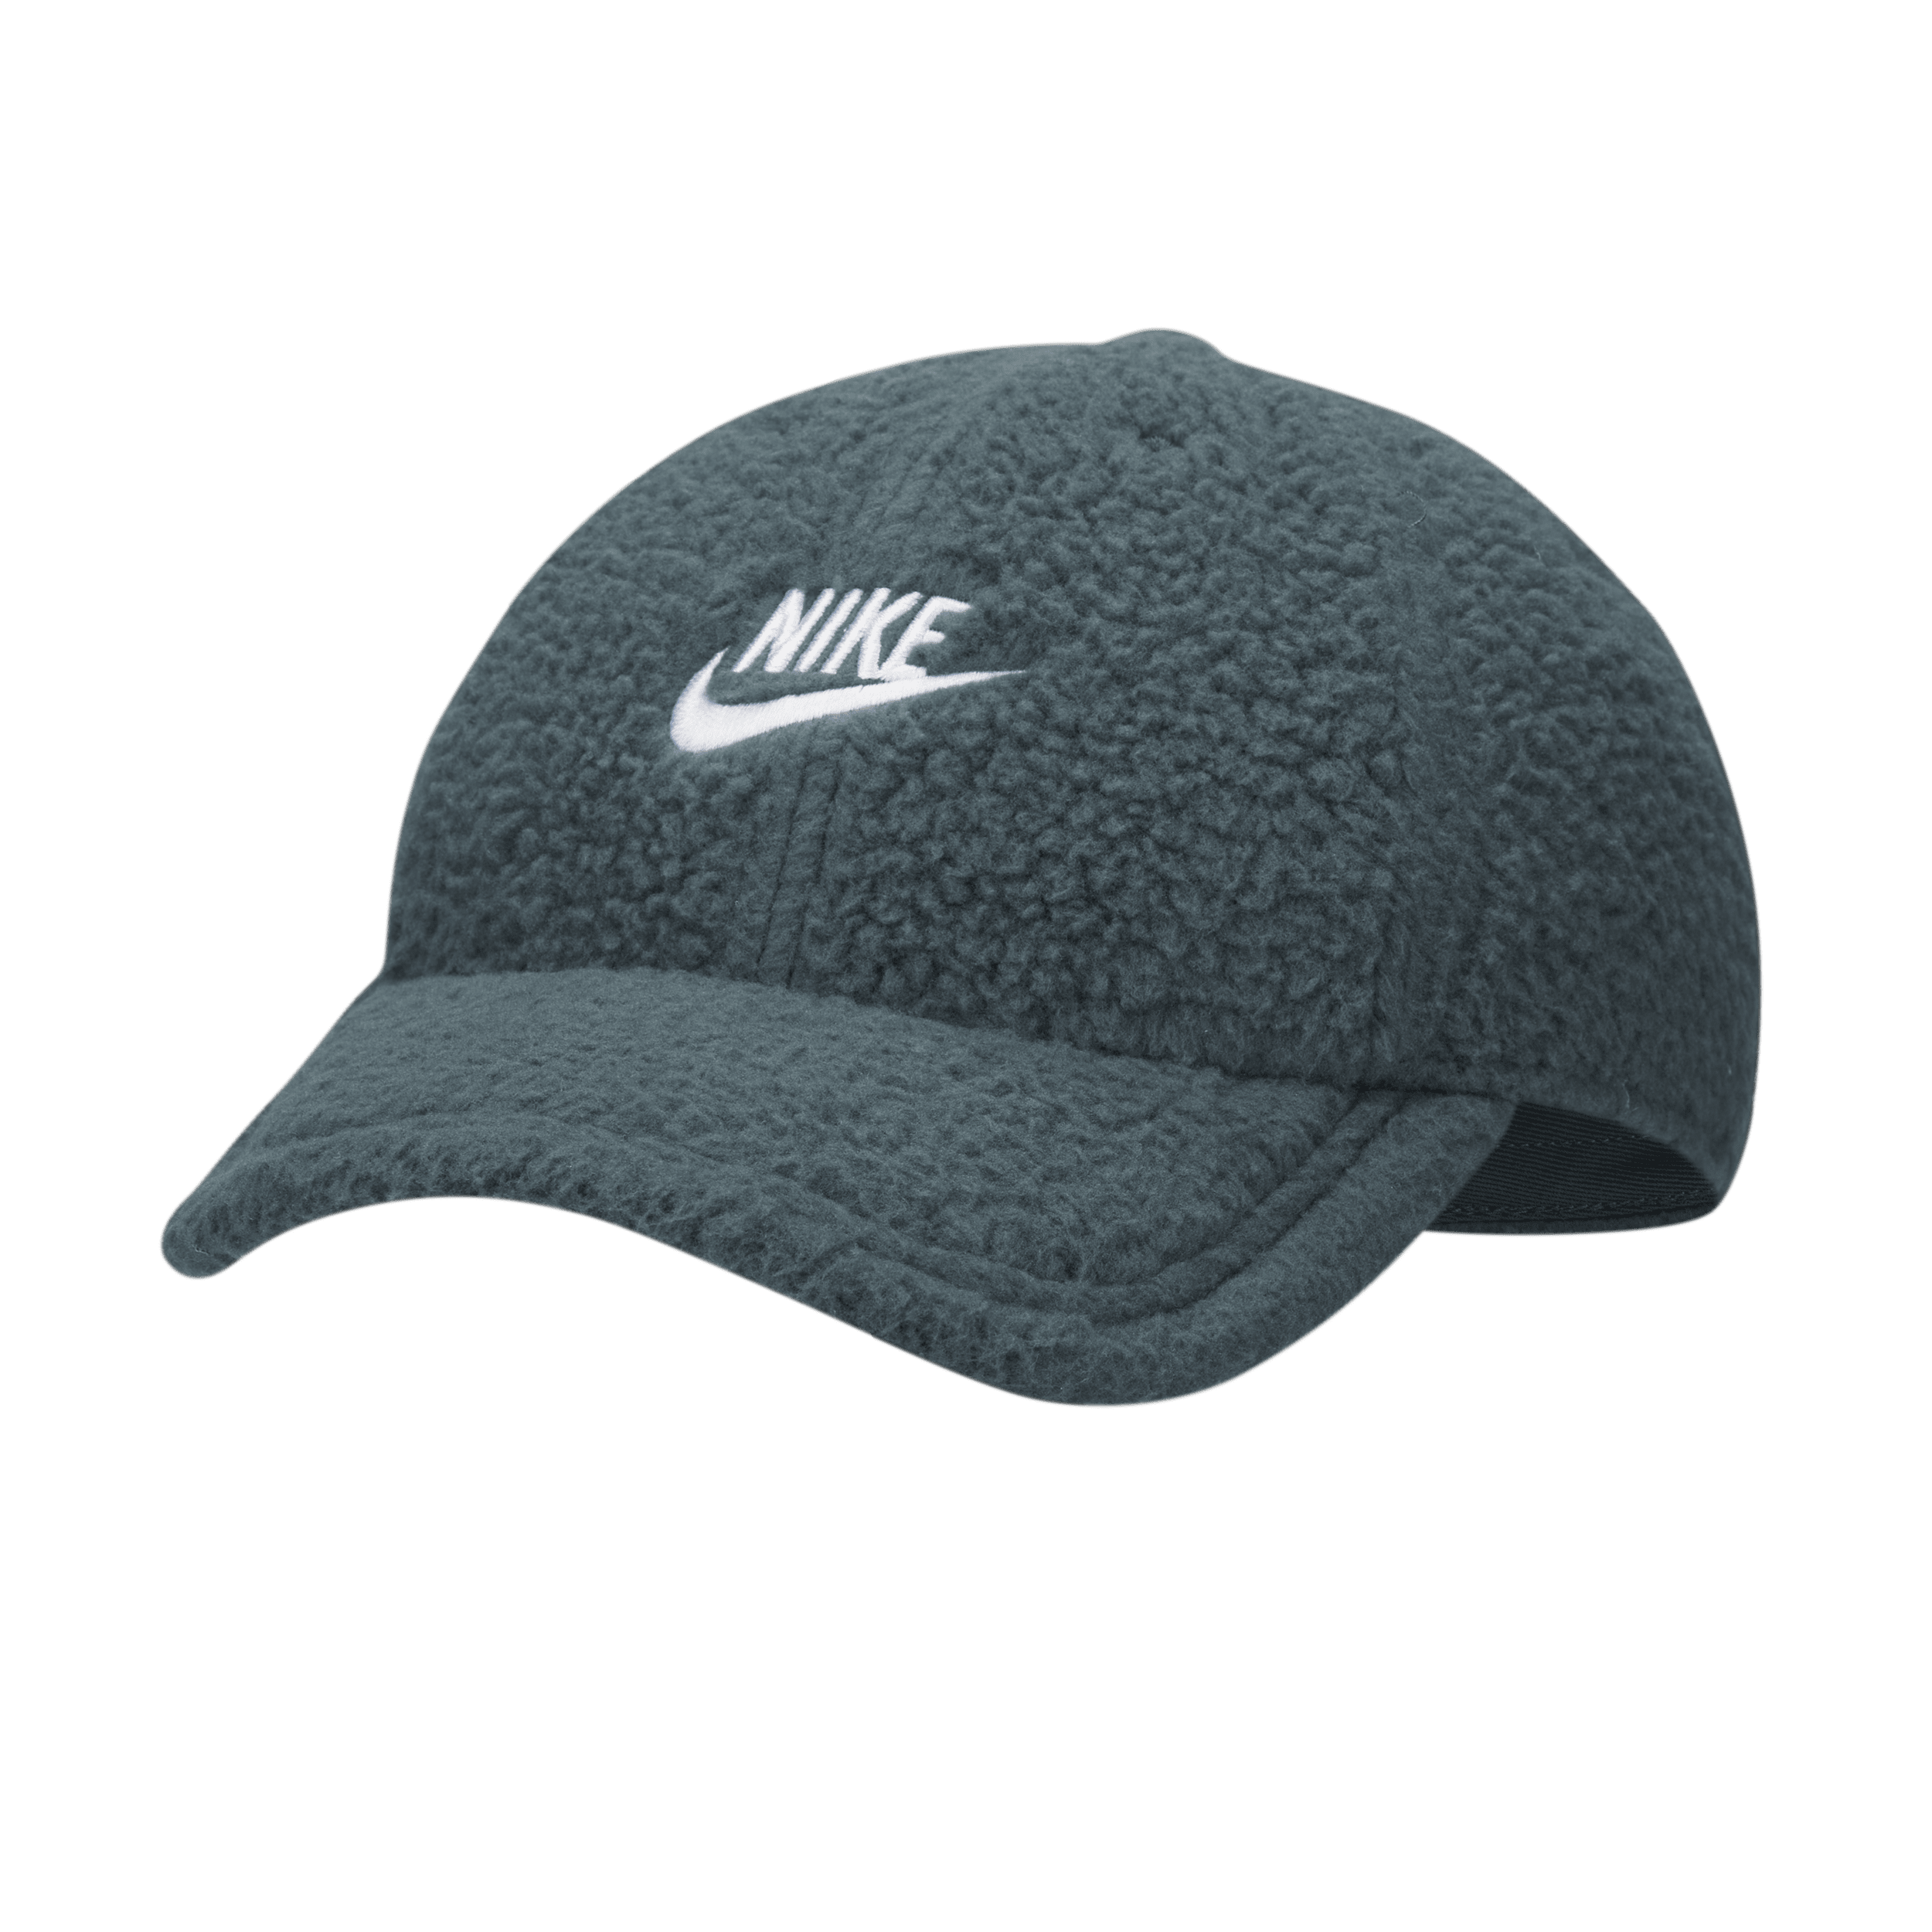 Nike Club Cap Gorra con visera curva sin estructura - Verde